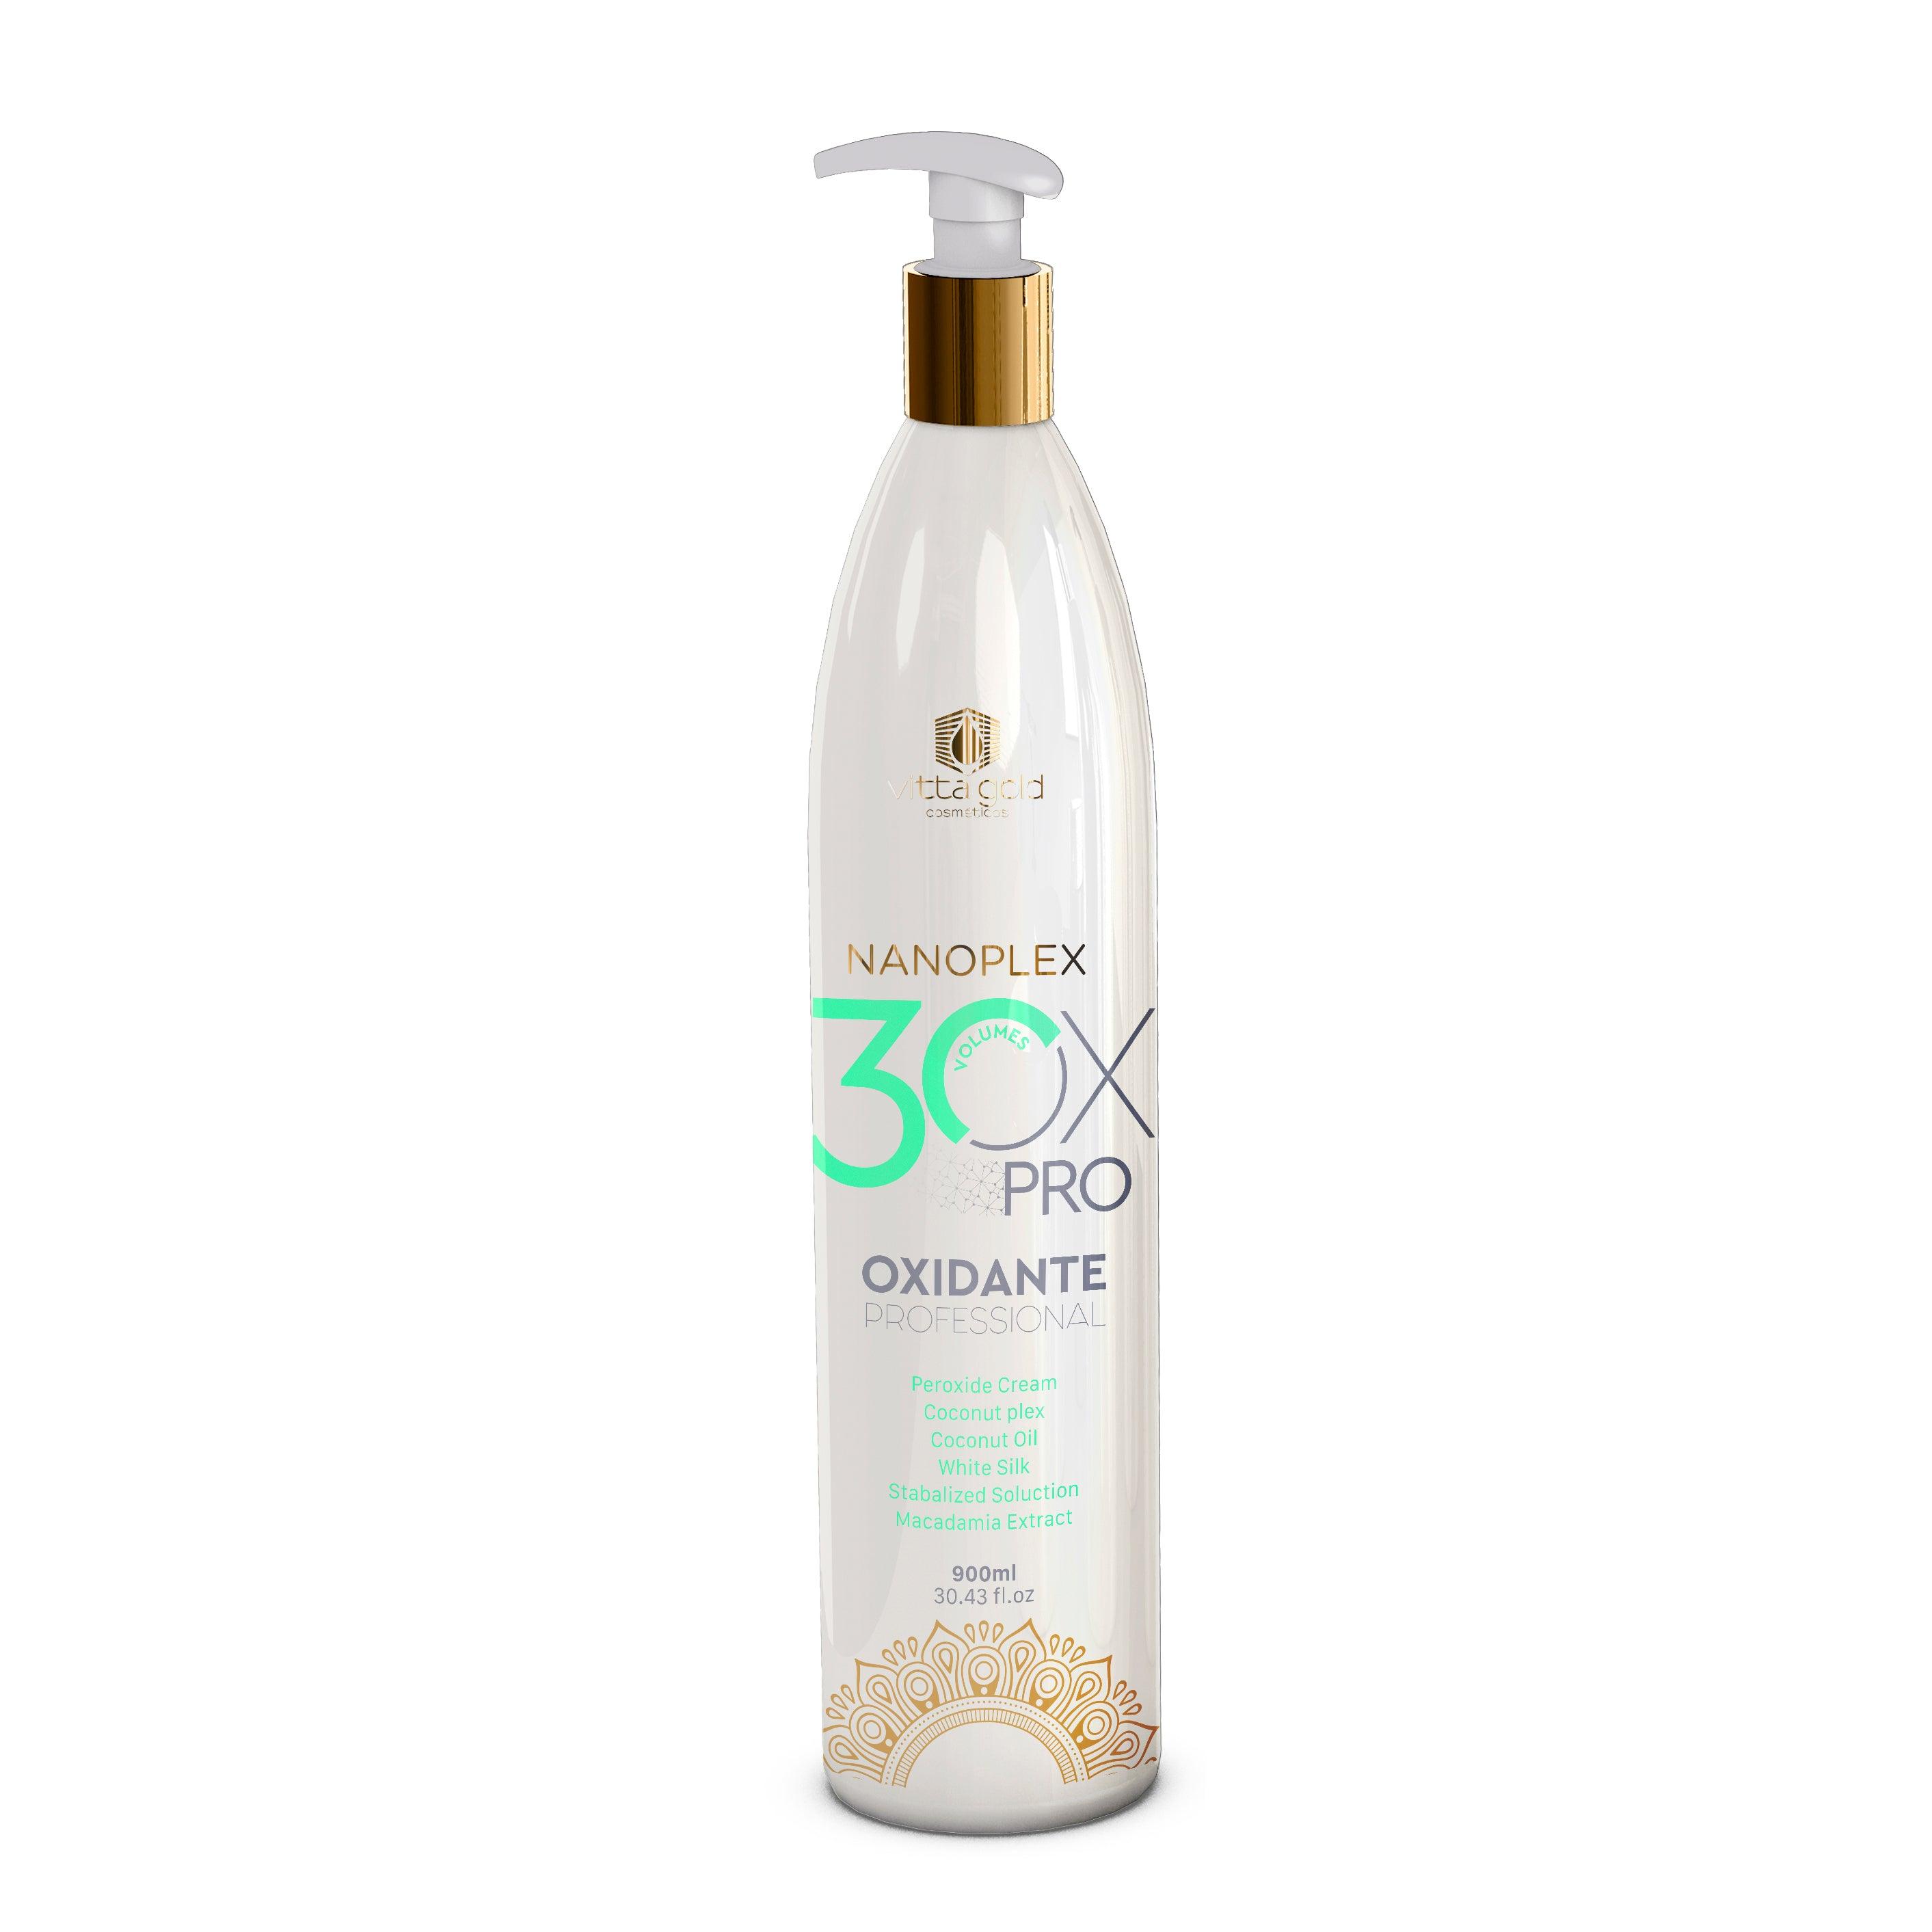 Nanoplex Crema Perossido OX - 30vol. Professional Hair Oxidizing-Crema Prooxide-Vitta Gold